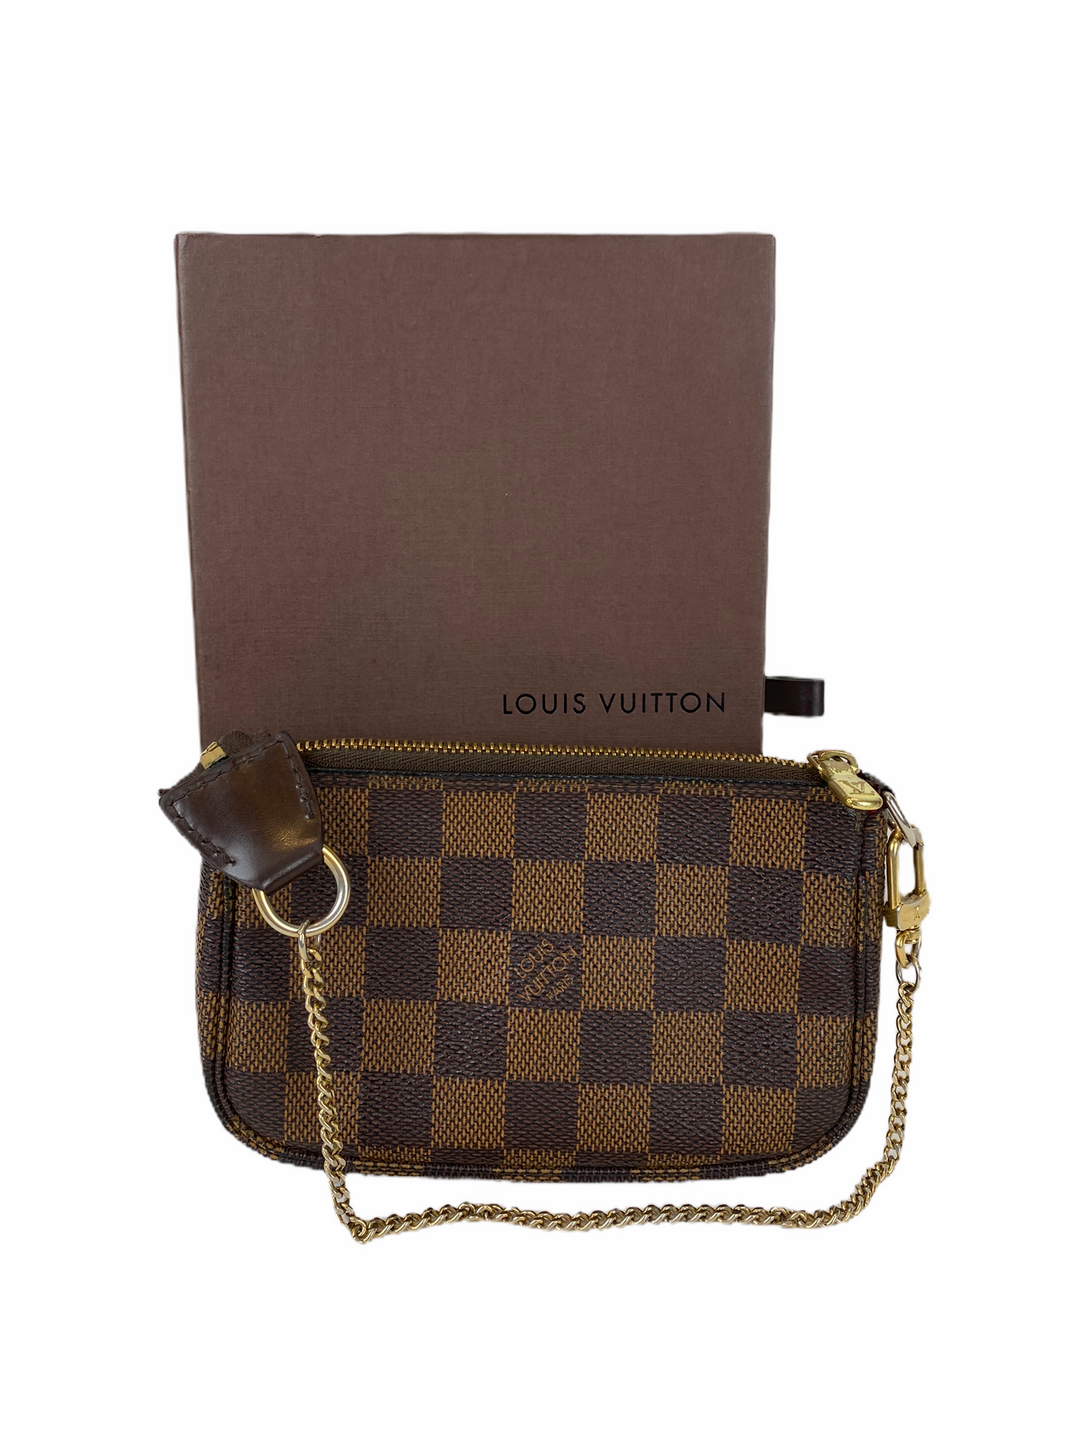 Louis Vuitton Damier Ebene Mini Pochette - As Seen on Instagram 19/08/2020 - Siopaella Designer Exchange